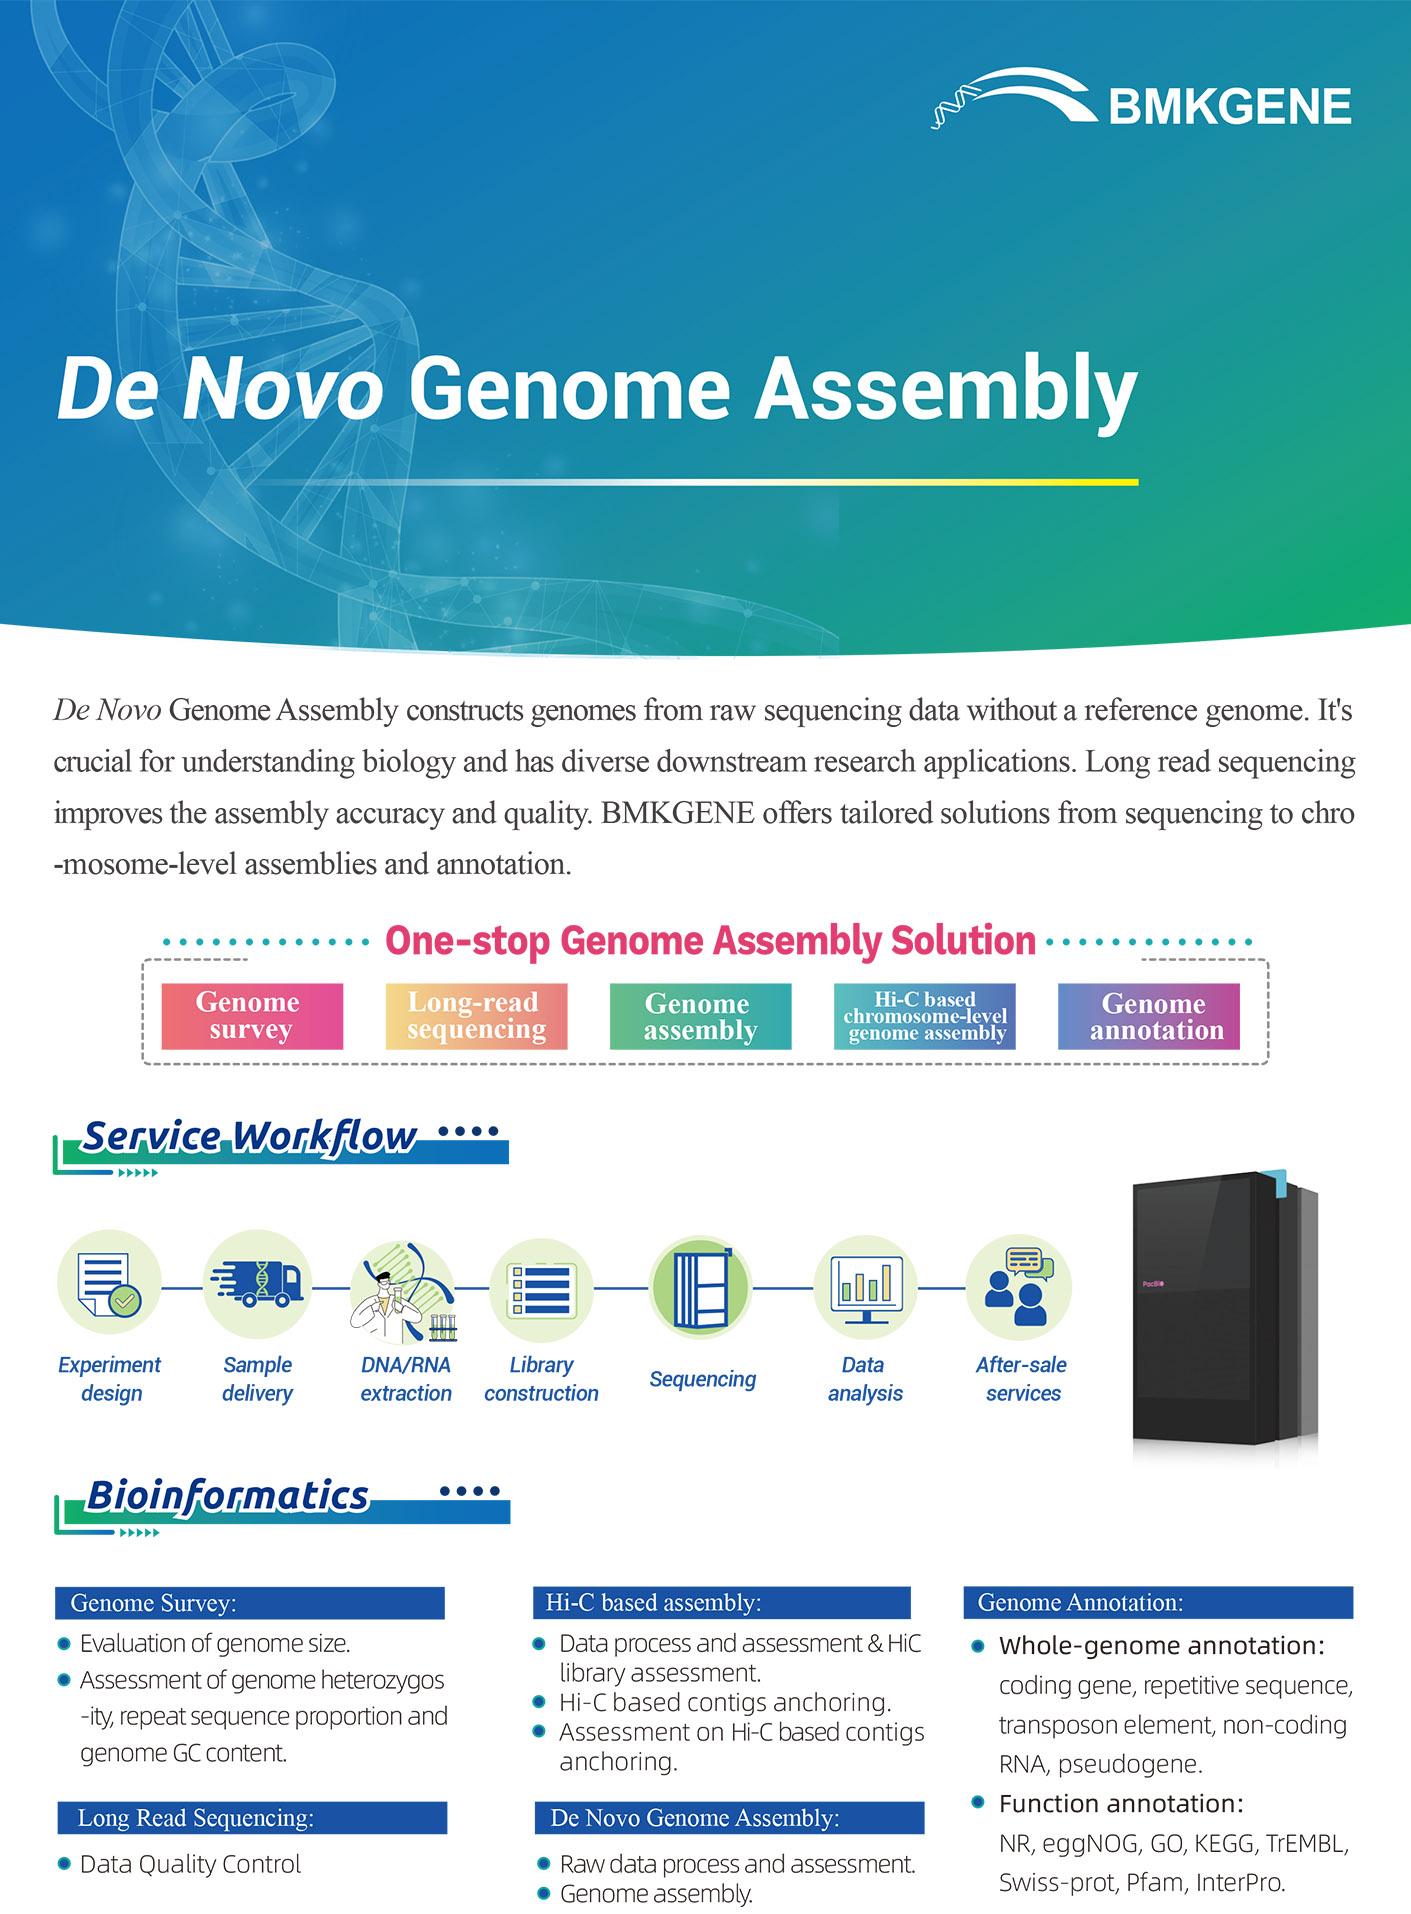 http://www.bmkgene.com/uploads/Plant-and-Animal-De-Novo-Genome-Assembly-BMKGENE-2310.pdf